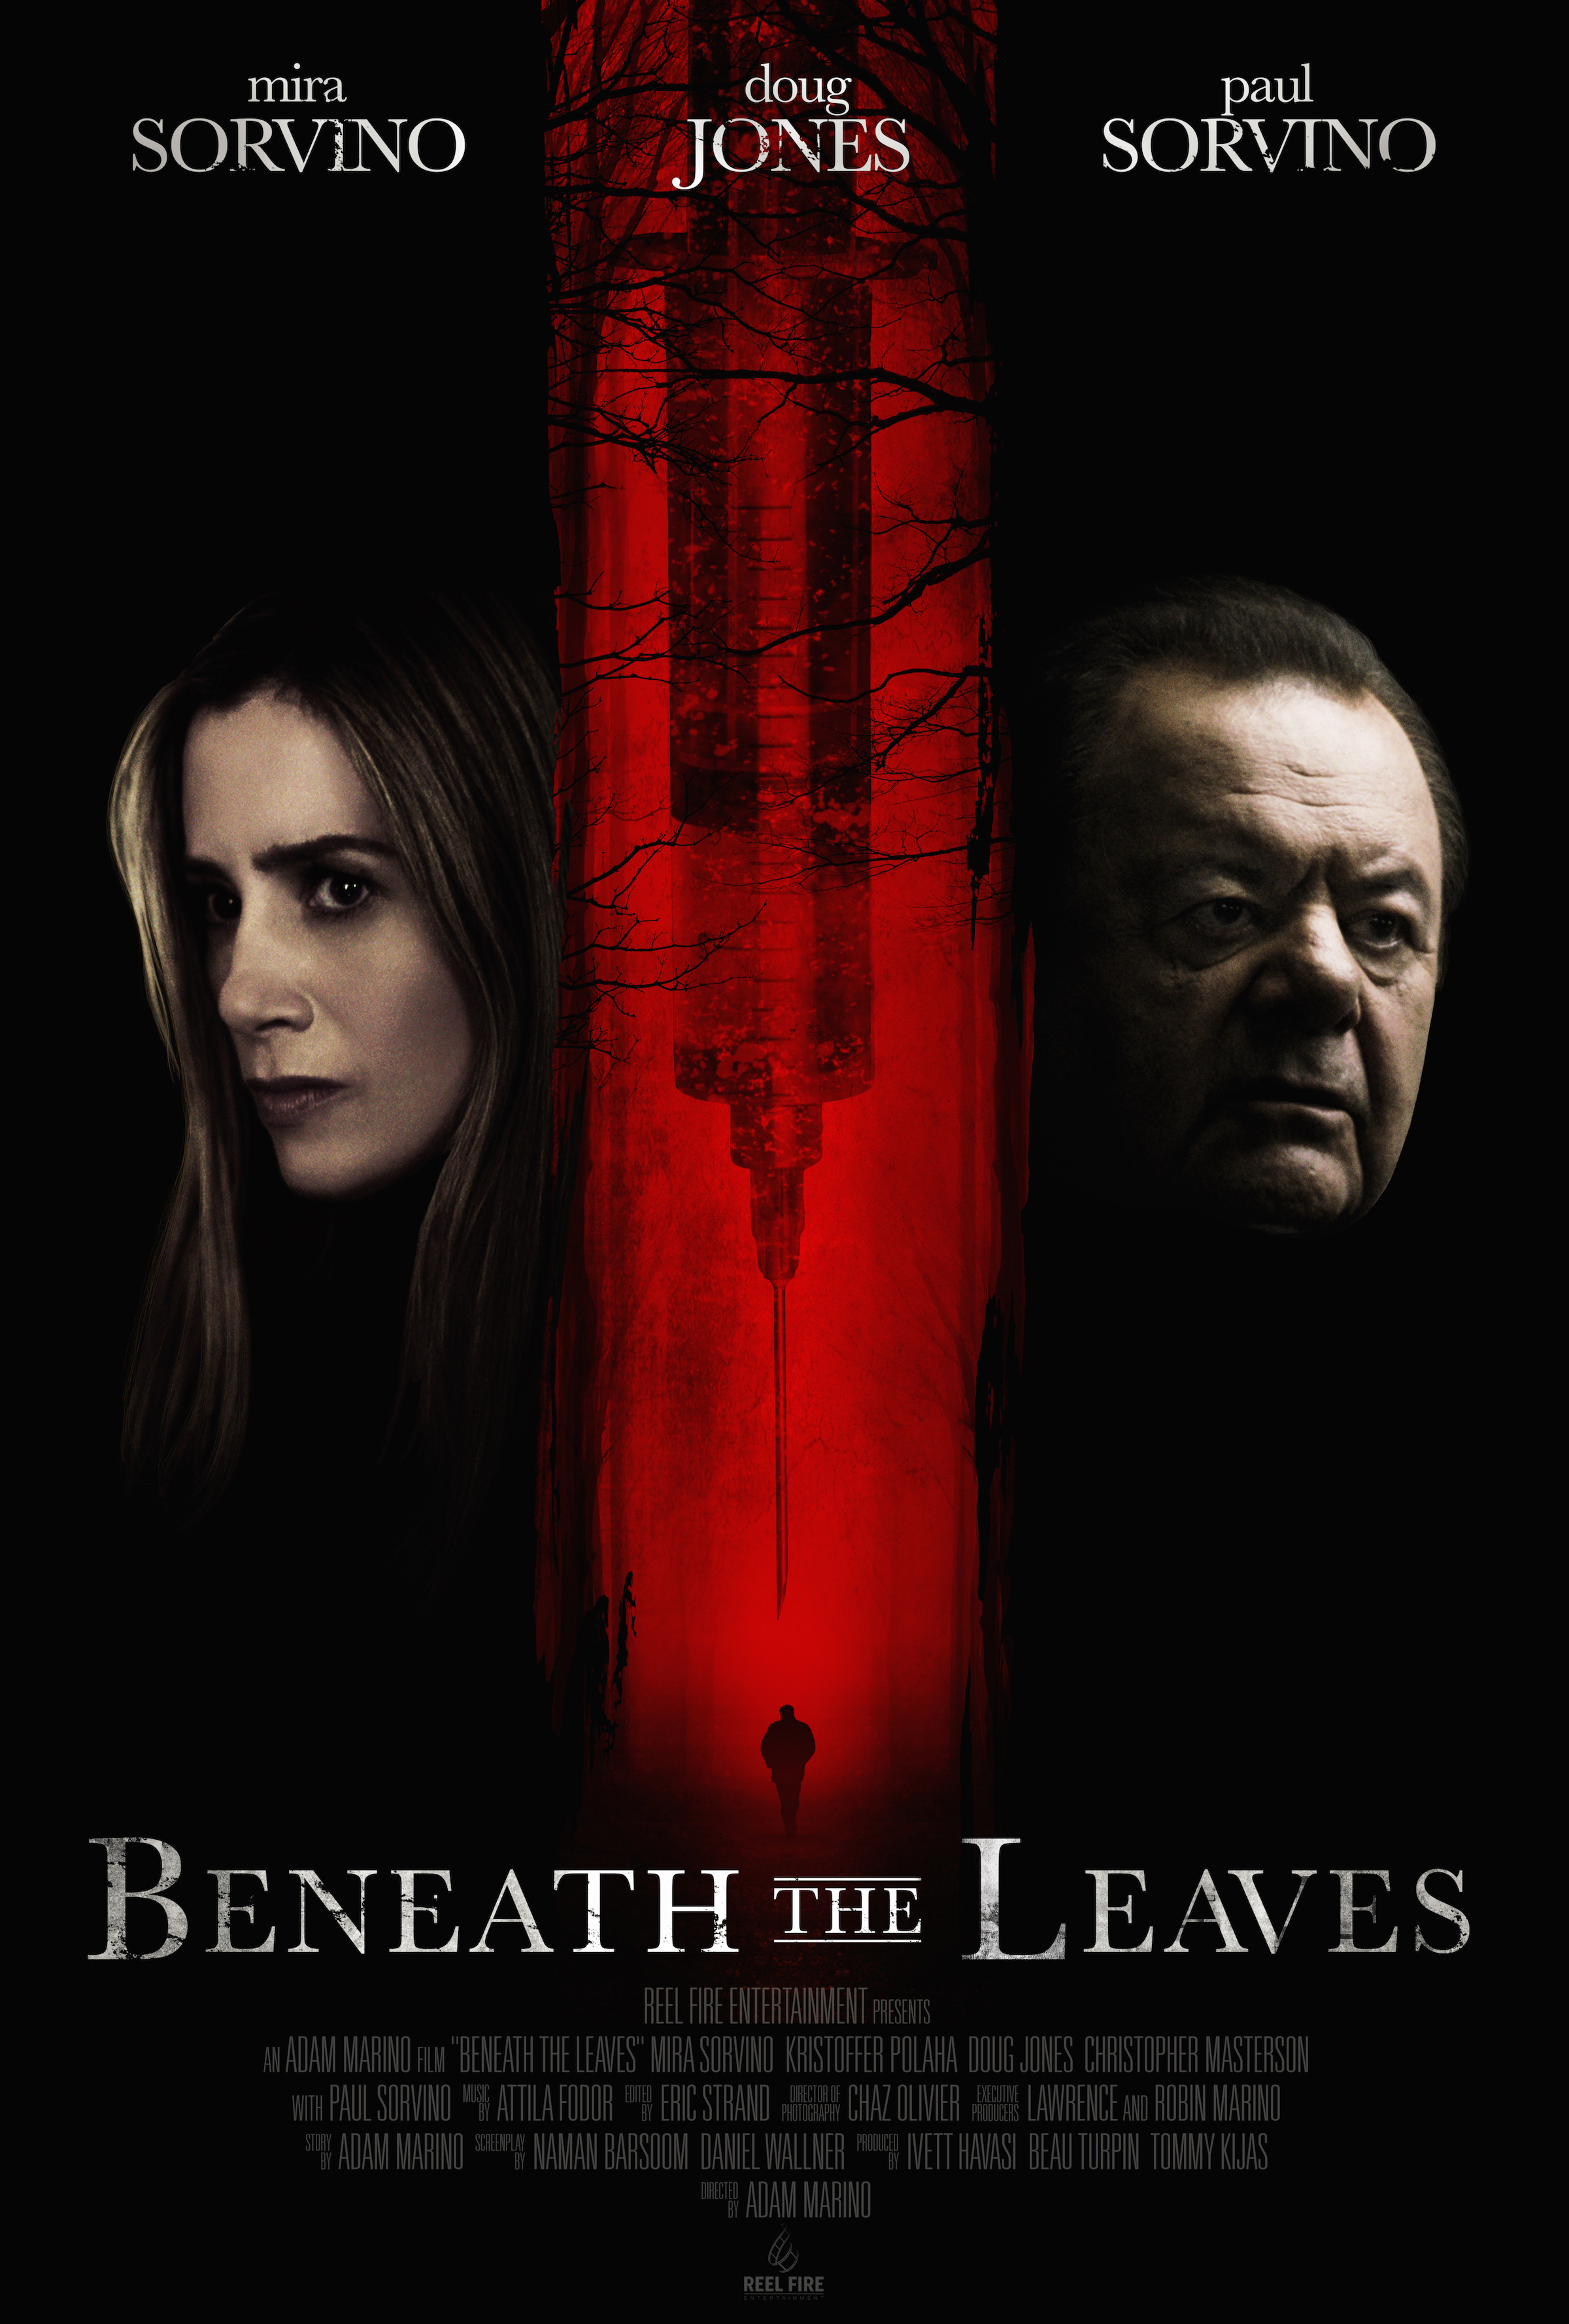 Nonton film Beneath The Leaves layarkaca21 indoxx1 ganool online streaming terbaru